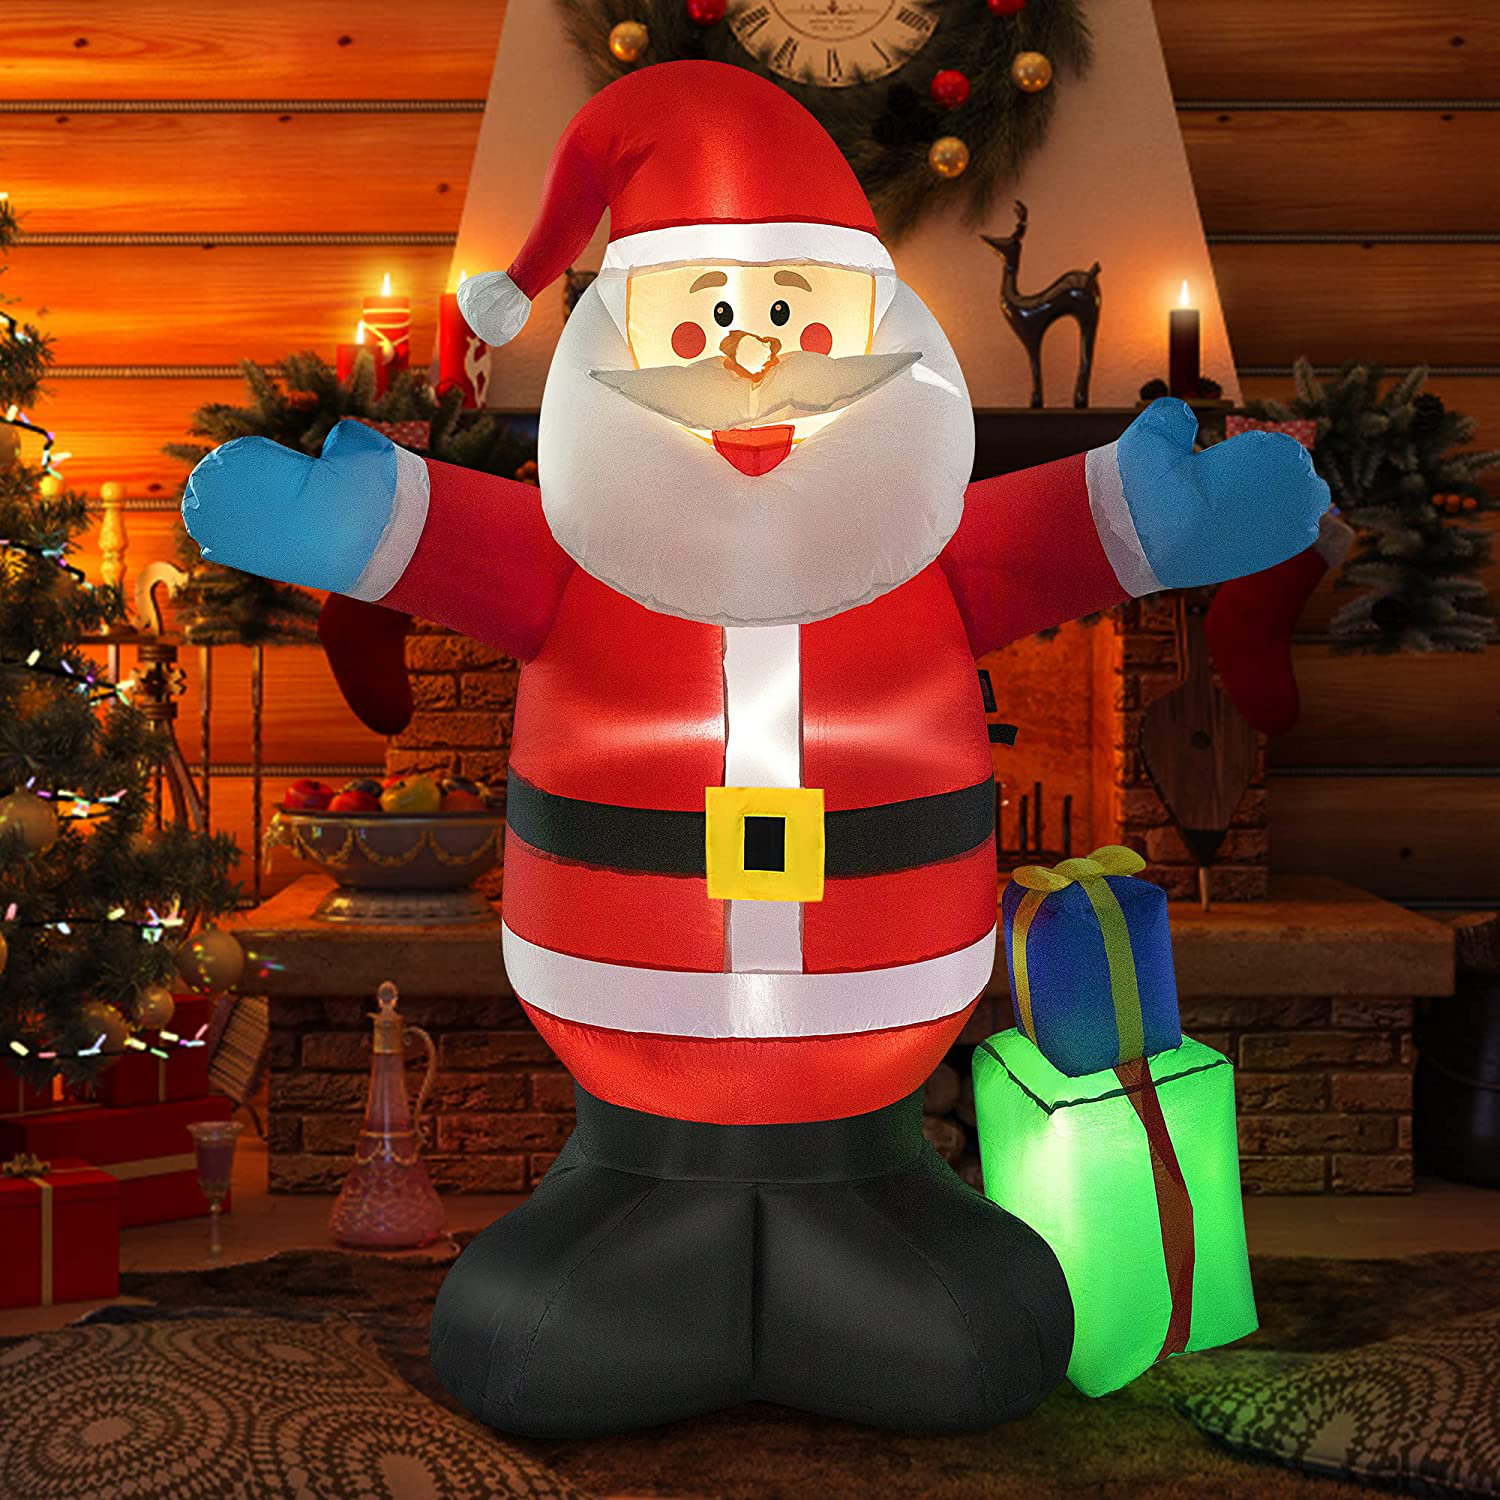 Glimp cultuur blok The Holiday Aisle® Emila Santa with Gift Boxes Christmas Inflatable |  Wayfair